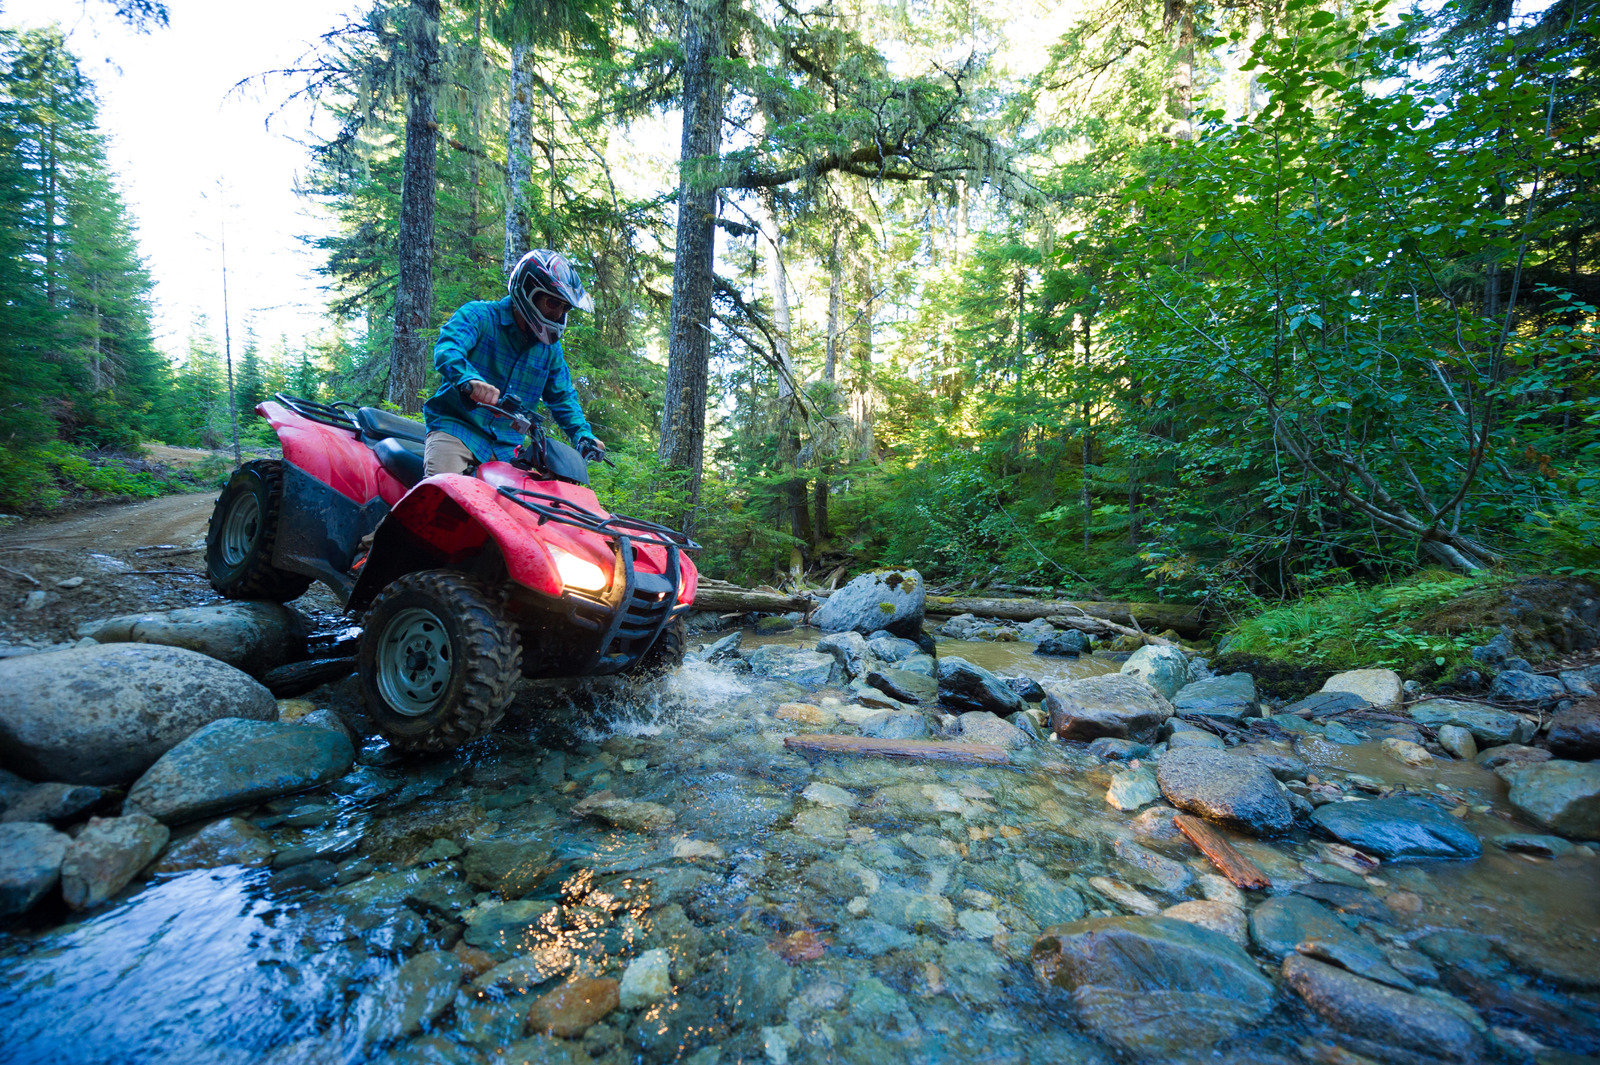 ATV or quad adventure in the forest